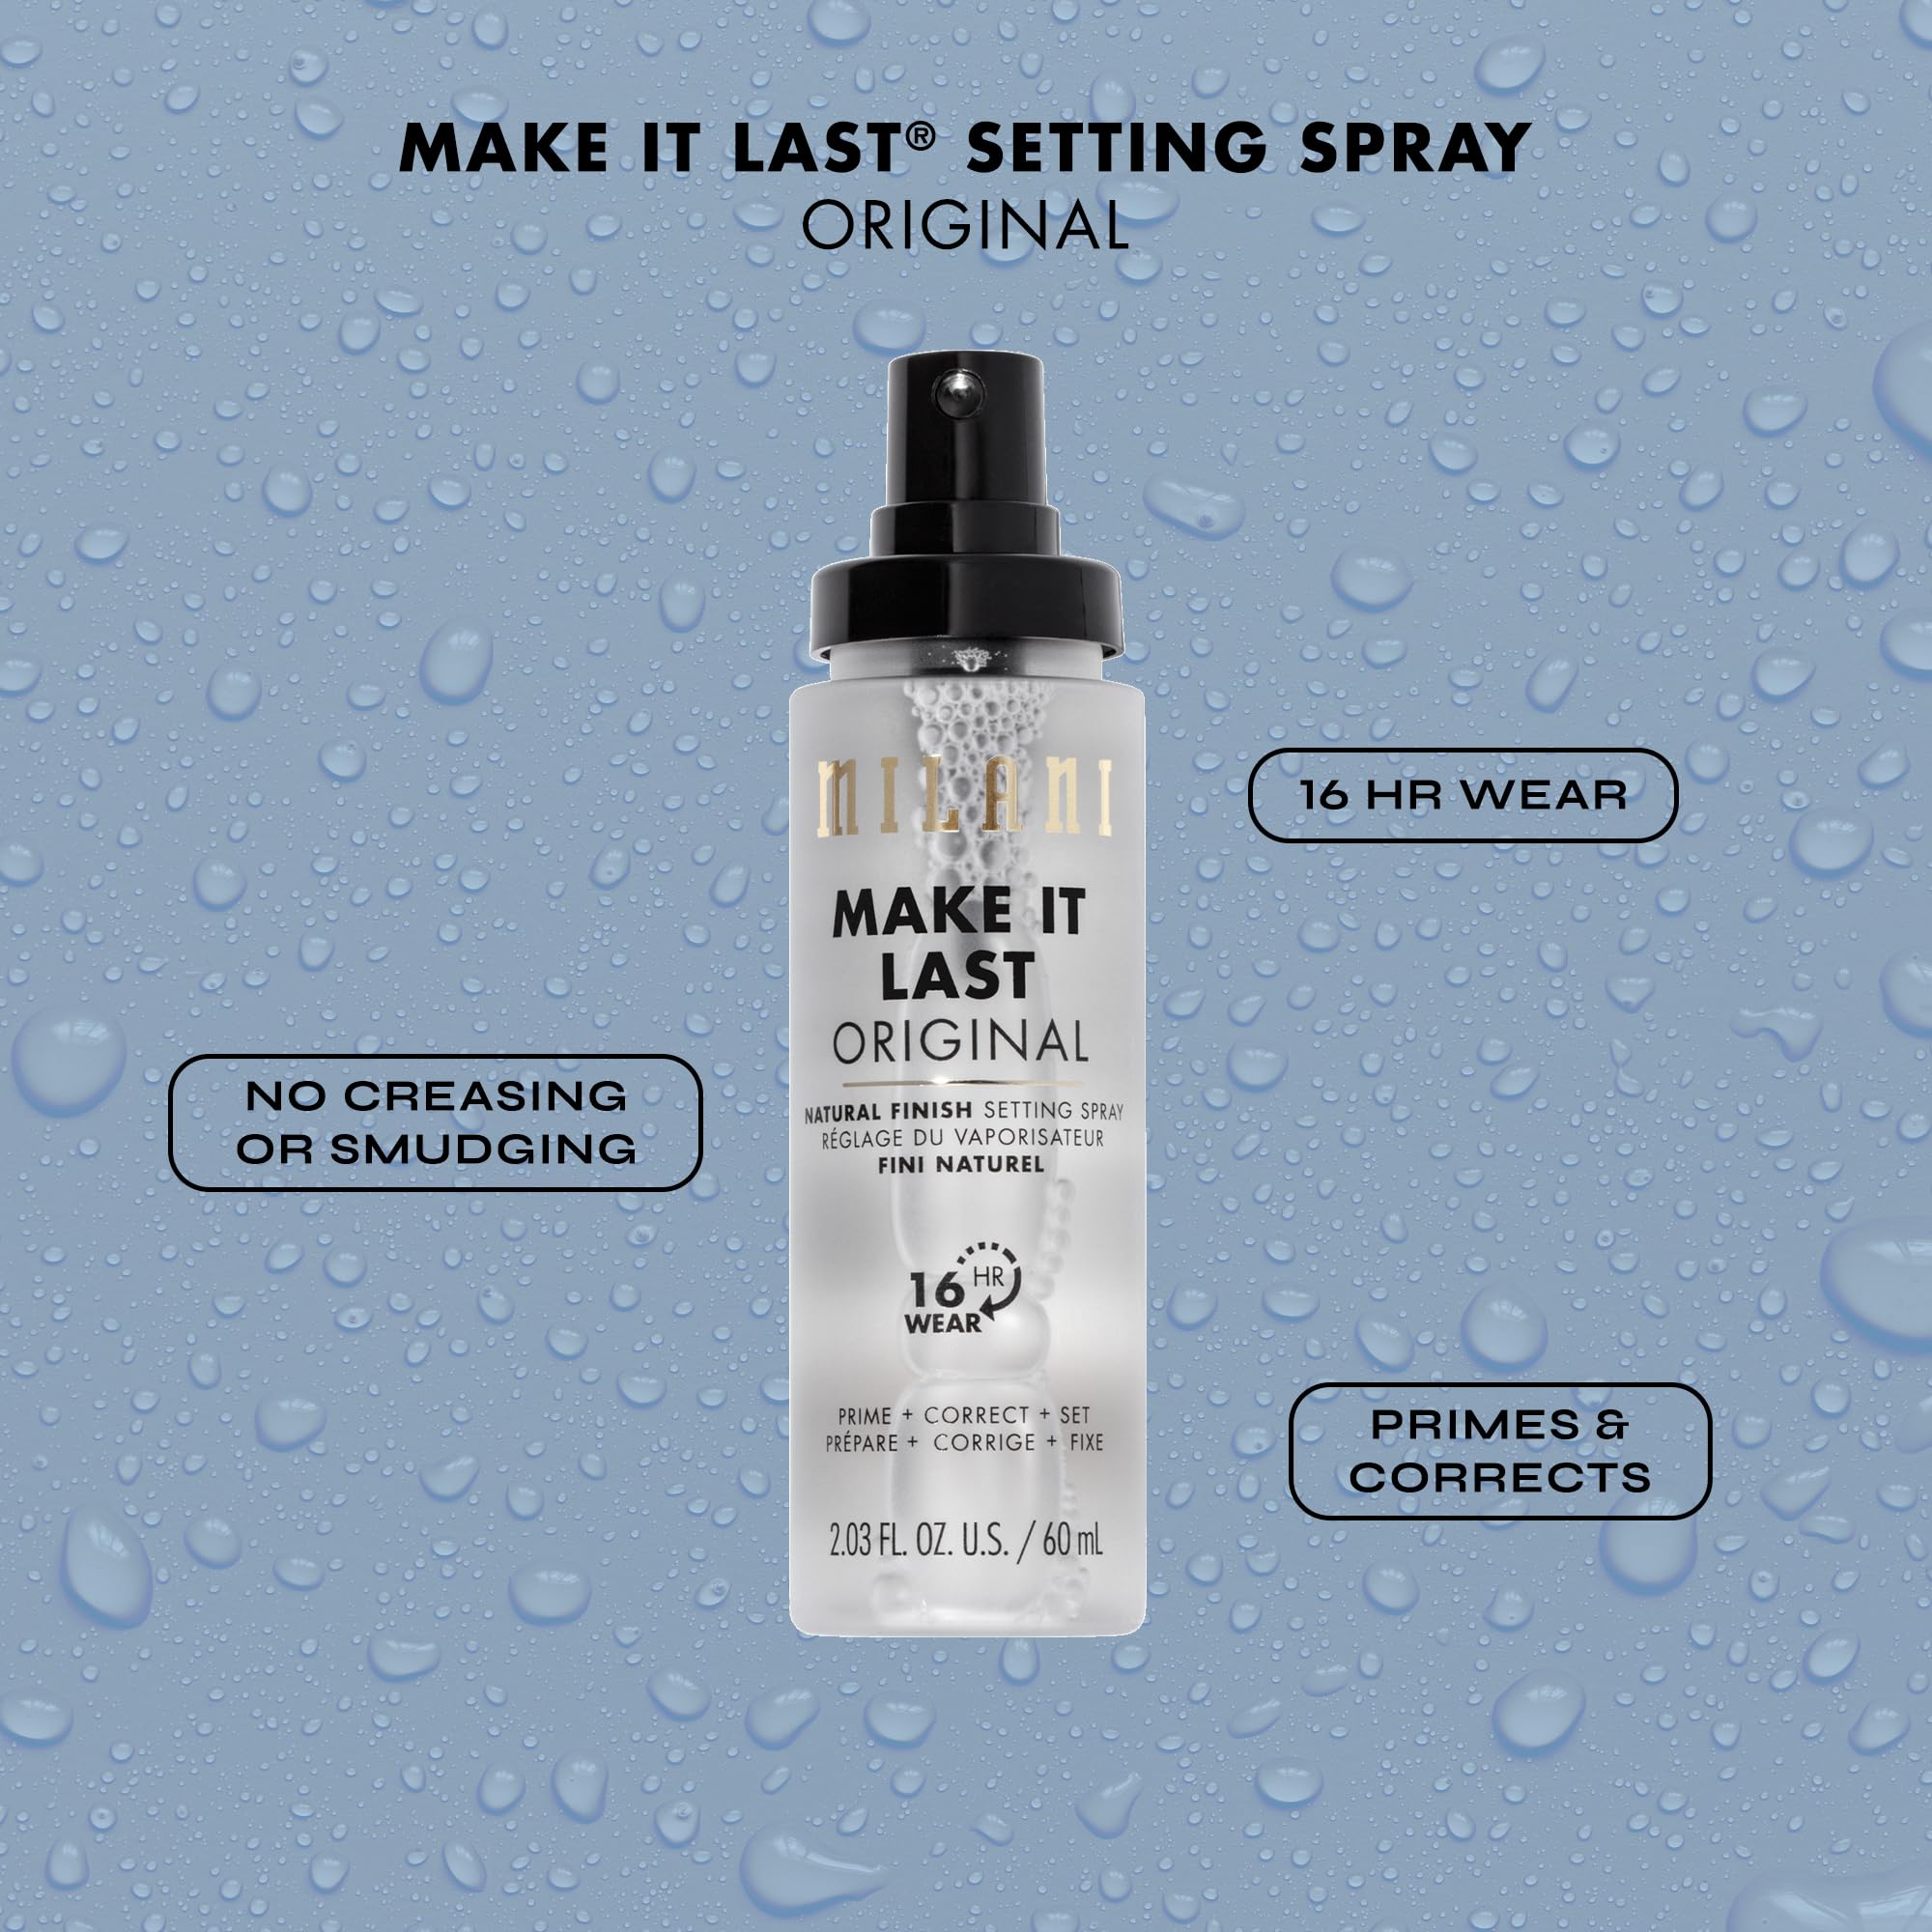 Milani Make It Last 3-in-1 Setting Spray and Primer- Prime + Correct + Set (2.03 Fl. Oz.) Makeup Finishing Spray and Primer - Long Lasting